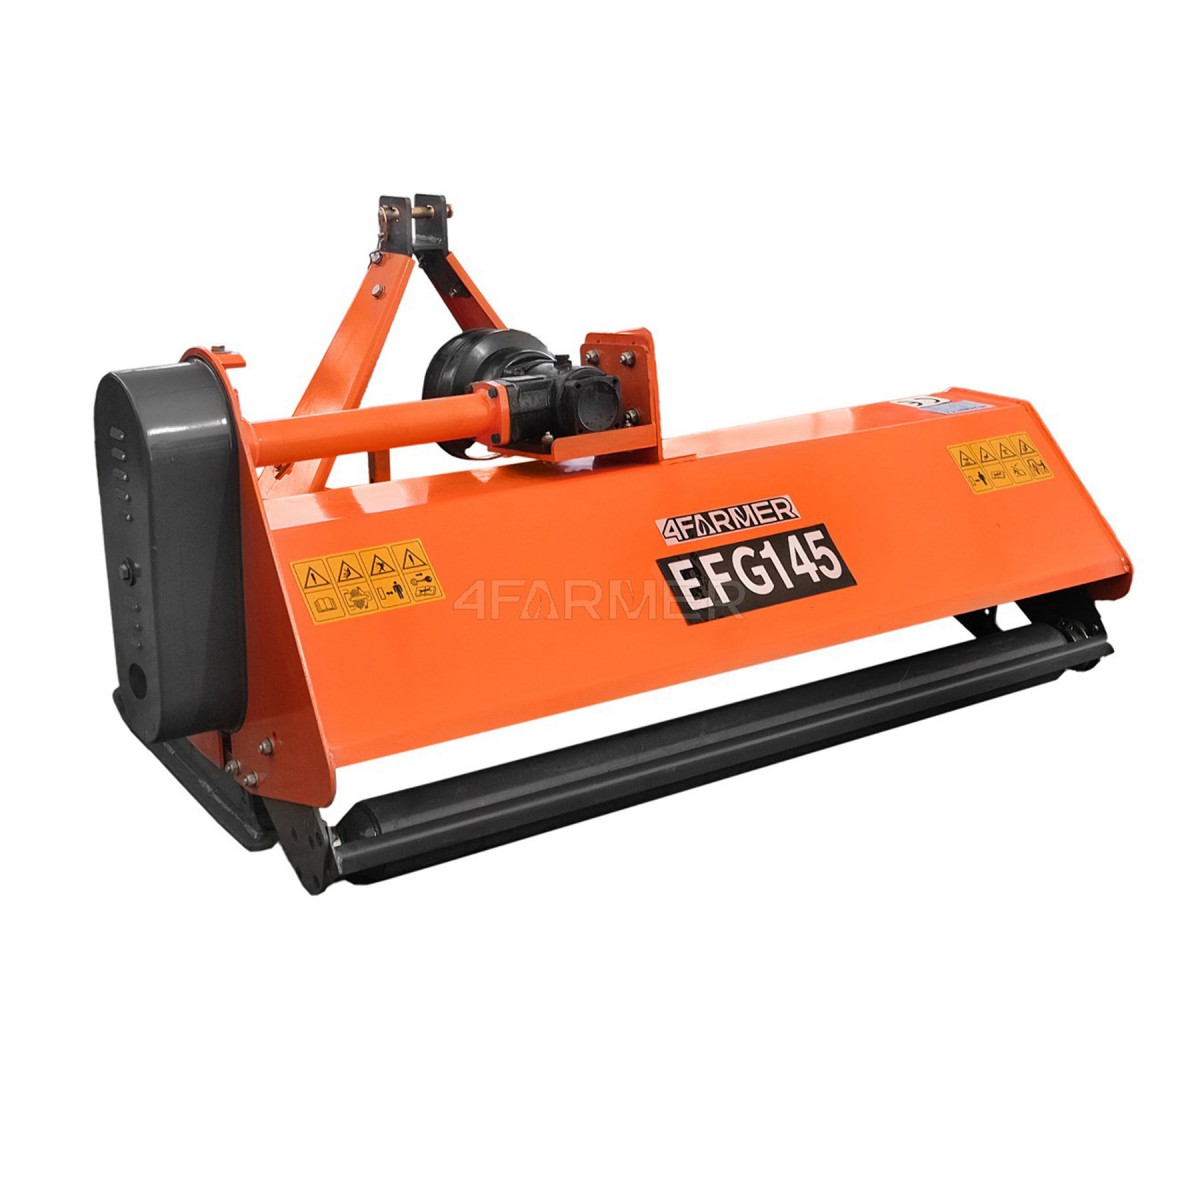 EFG 145 4FARMER flail mower - orange